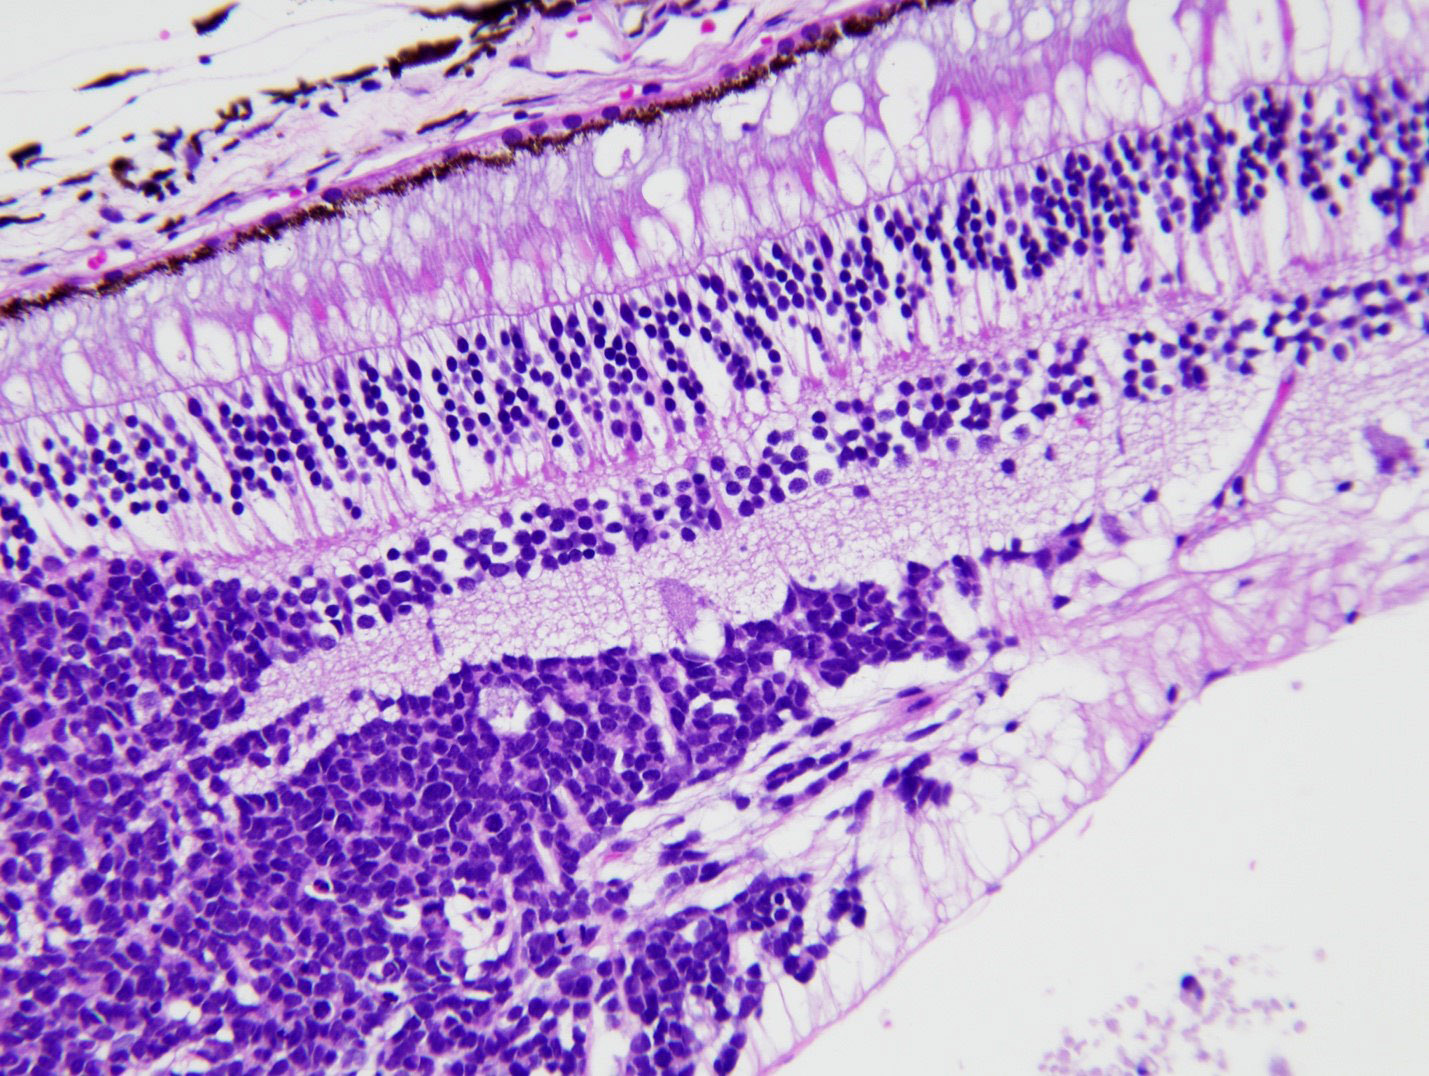 Retinoblastoma infiltrating normal retina